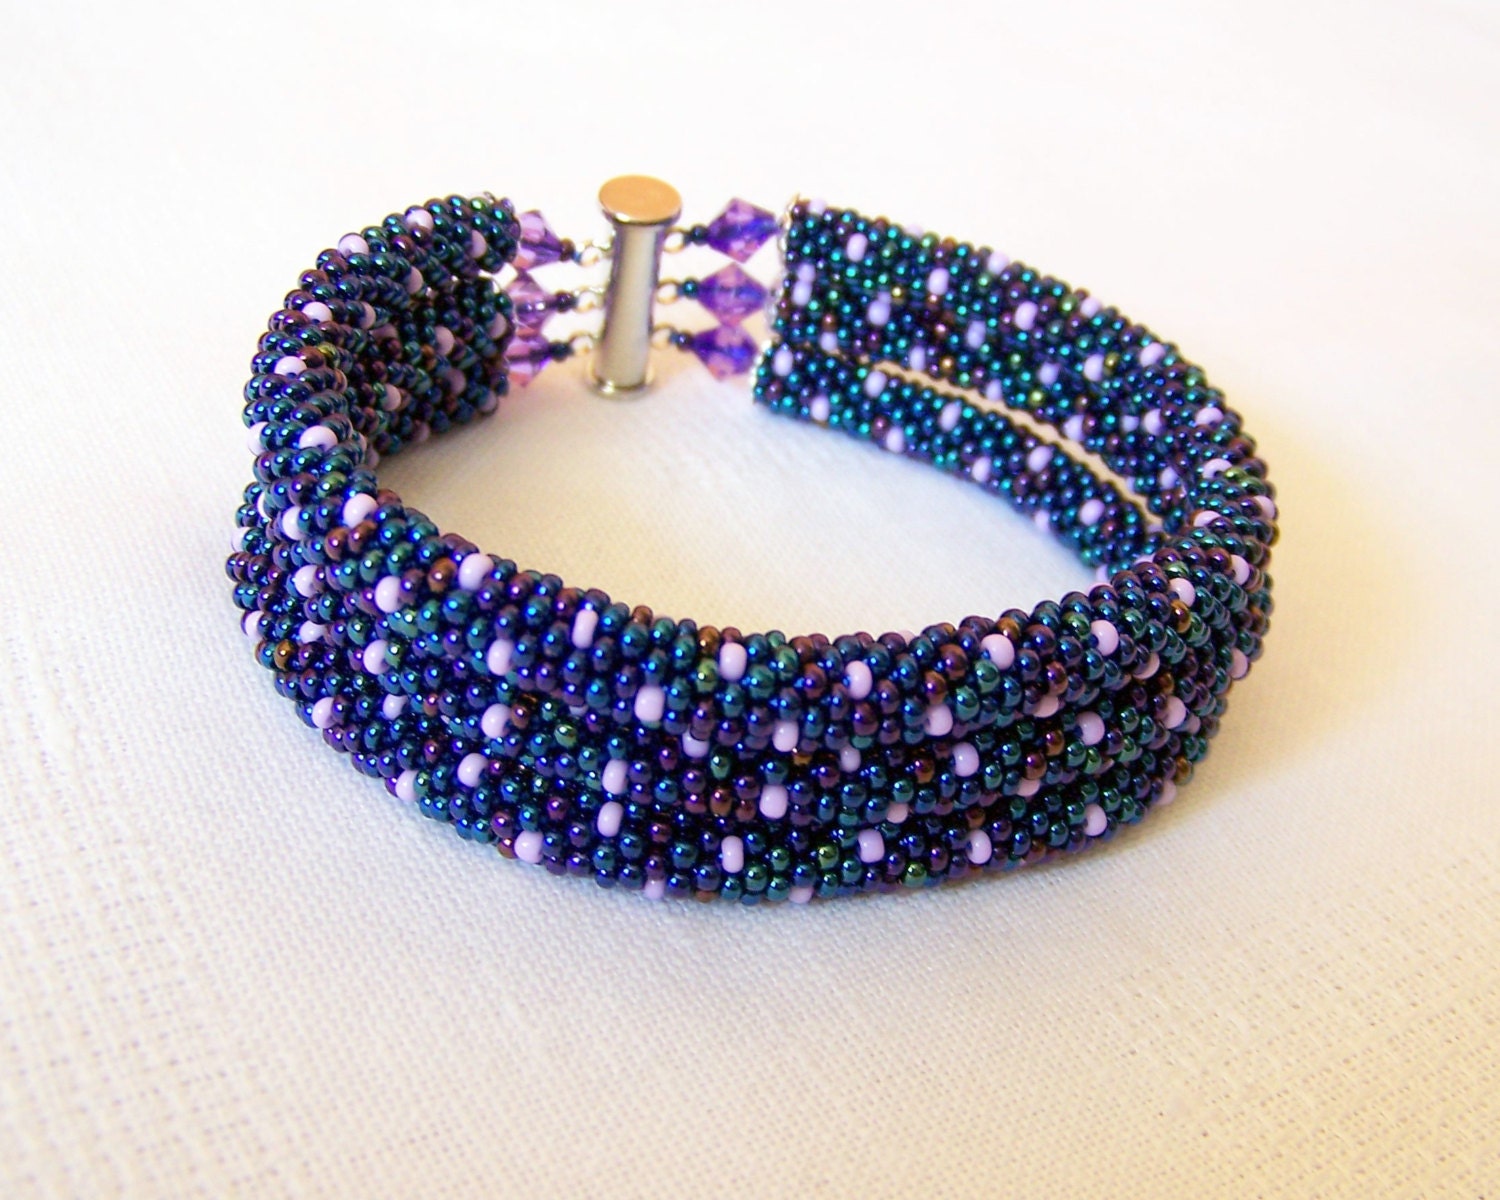 Beadwork 3 Strand Bead Crochet Rope Bracelet in irridescent